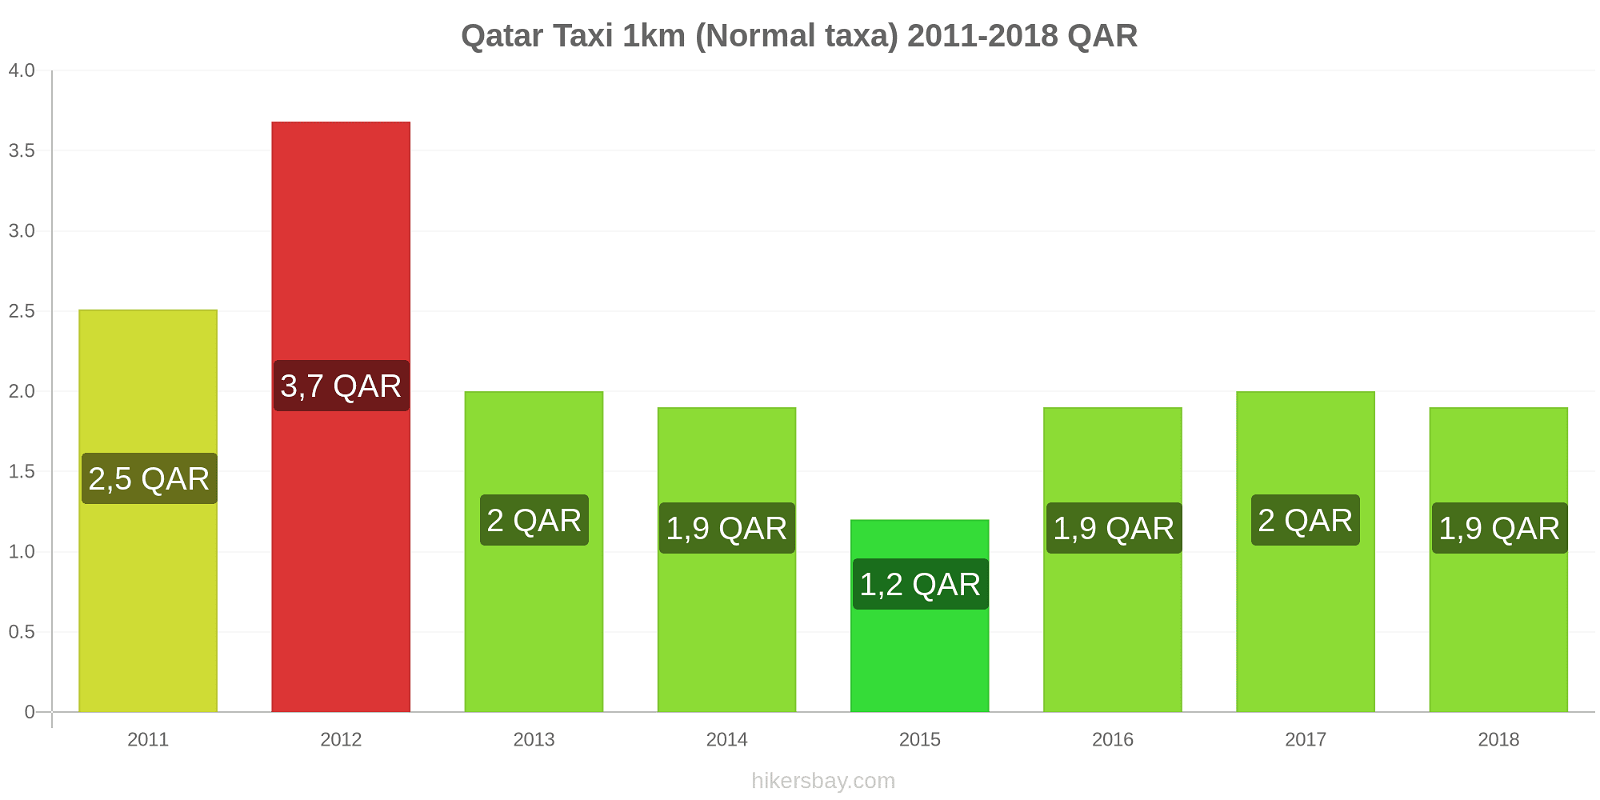 Qatar prisändringar Taxi 1km (Normal taxa) hikersbay.com